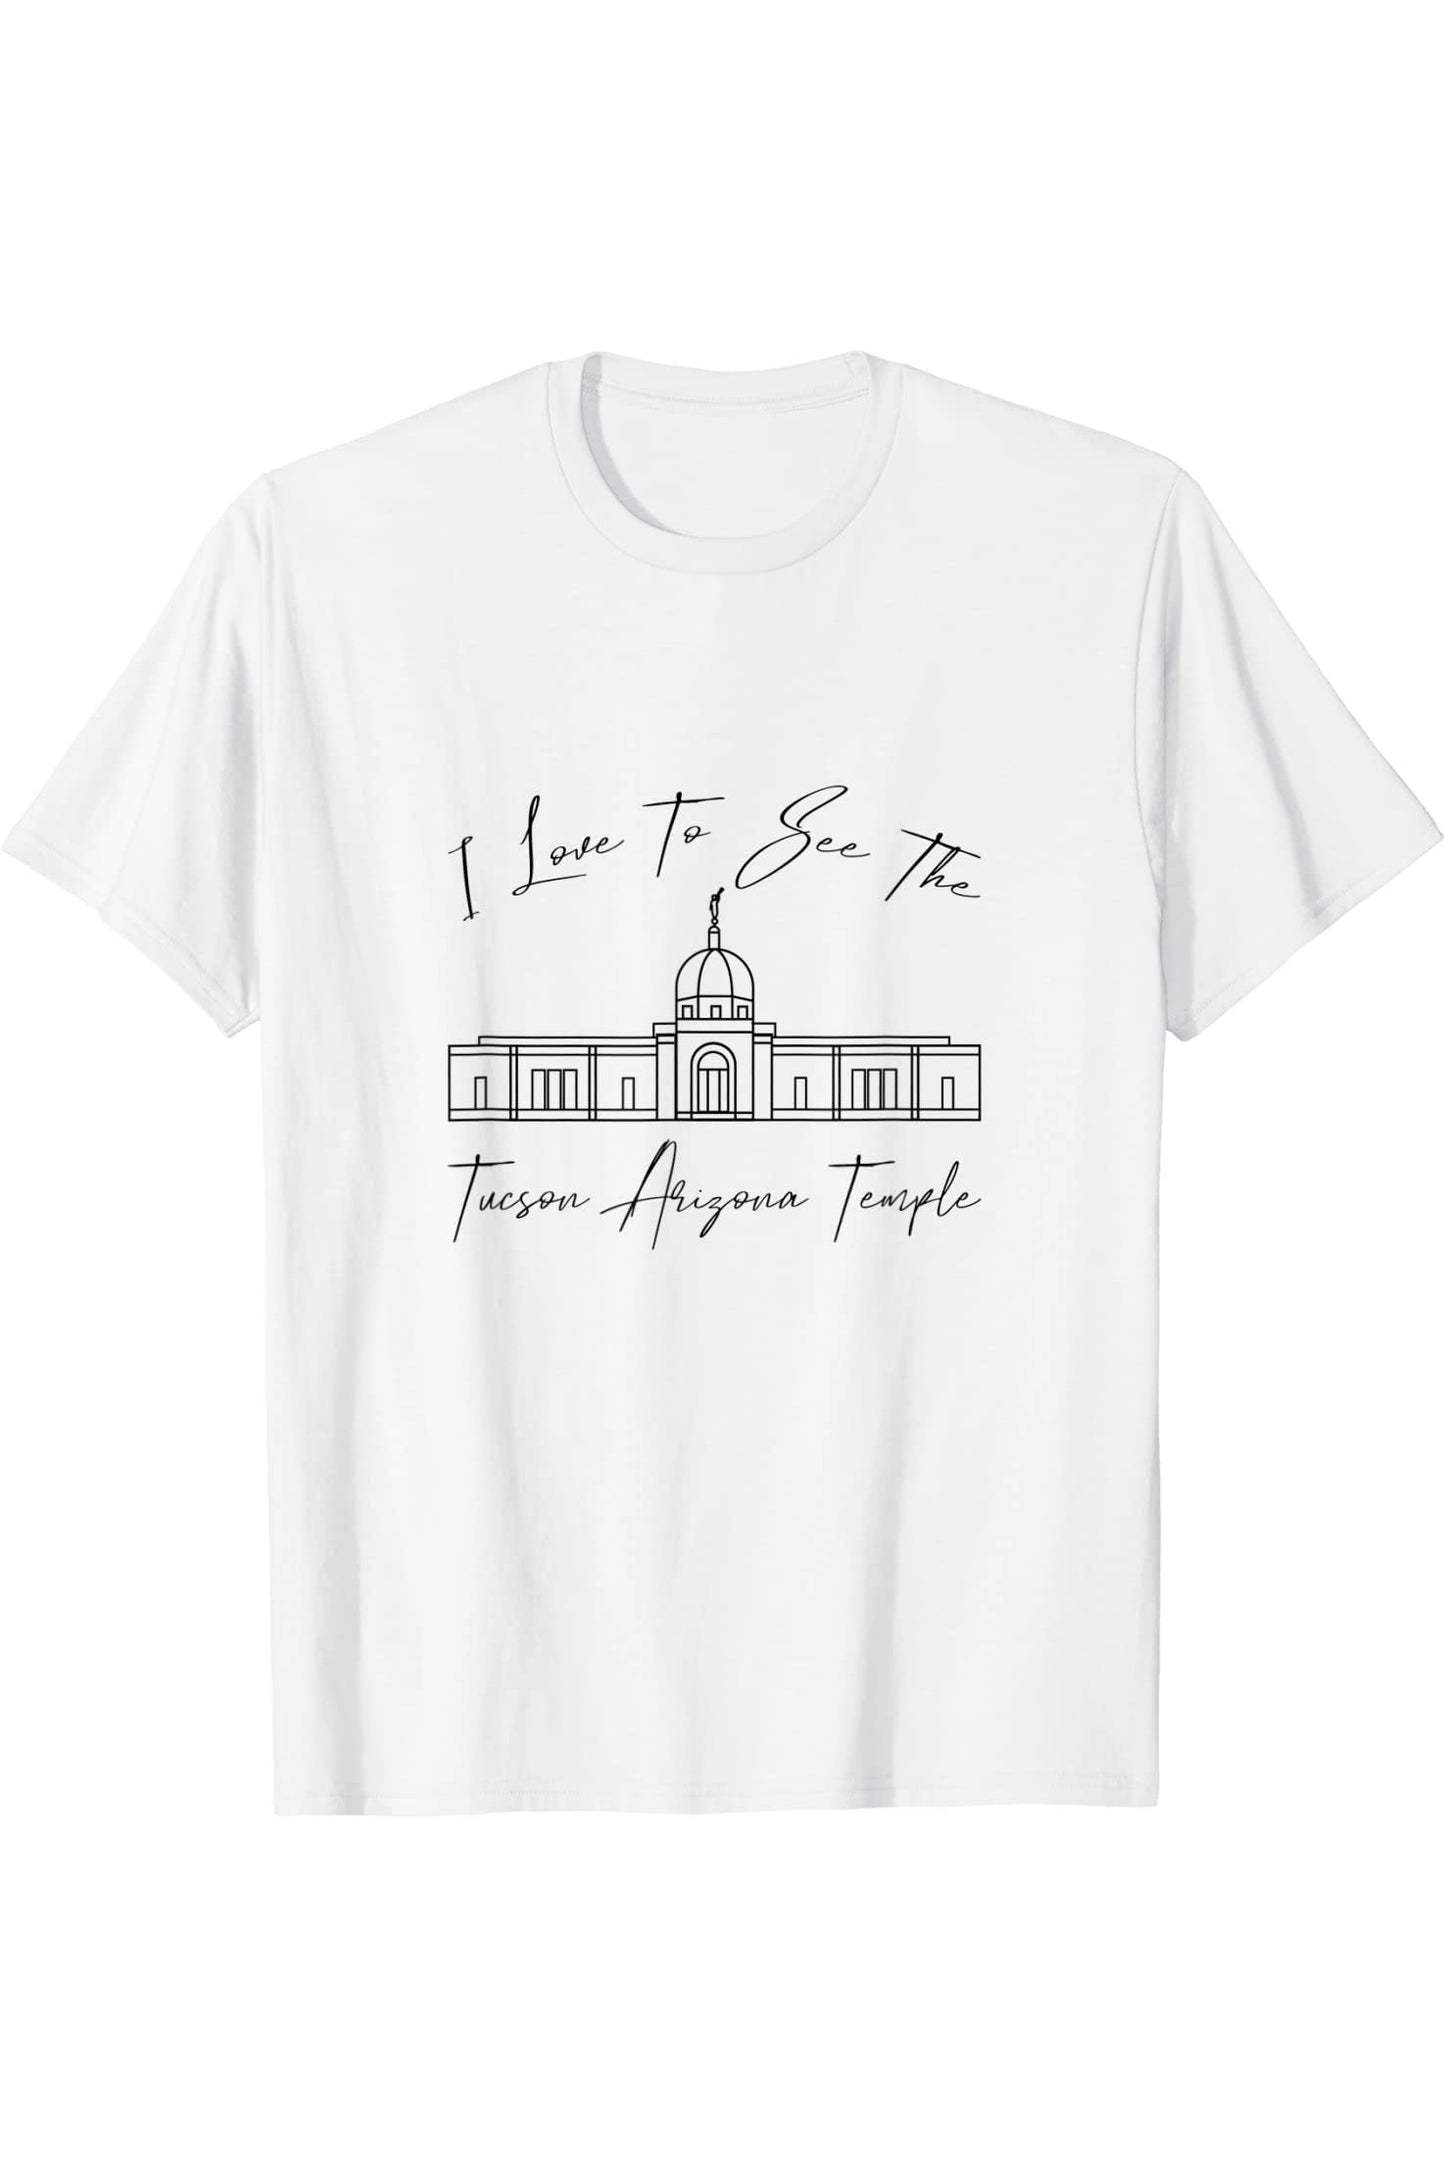 Templo Tucson AZ, me encanta ver mi templo, caligrafía T-Shirt